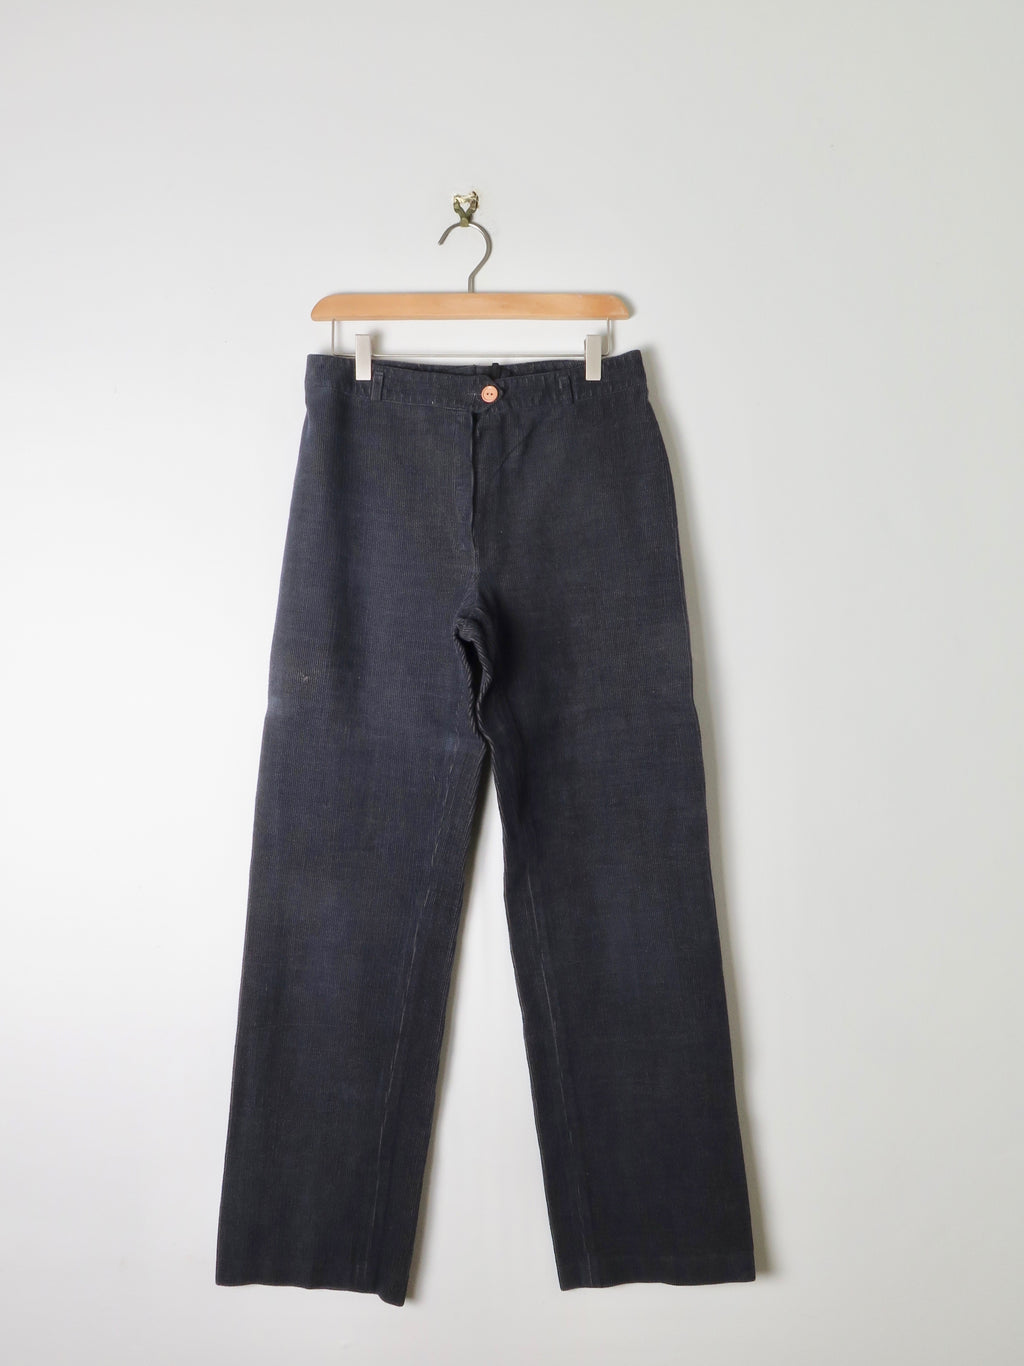 Women's Charcoal Black Cord Trousers 31" 10/12